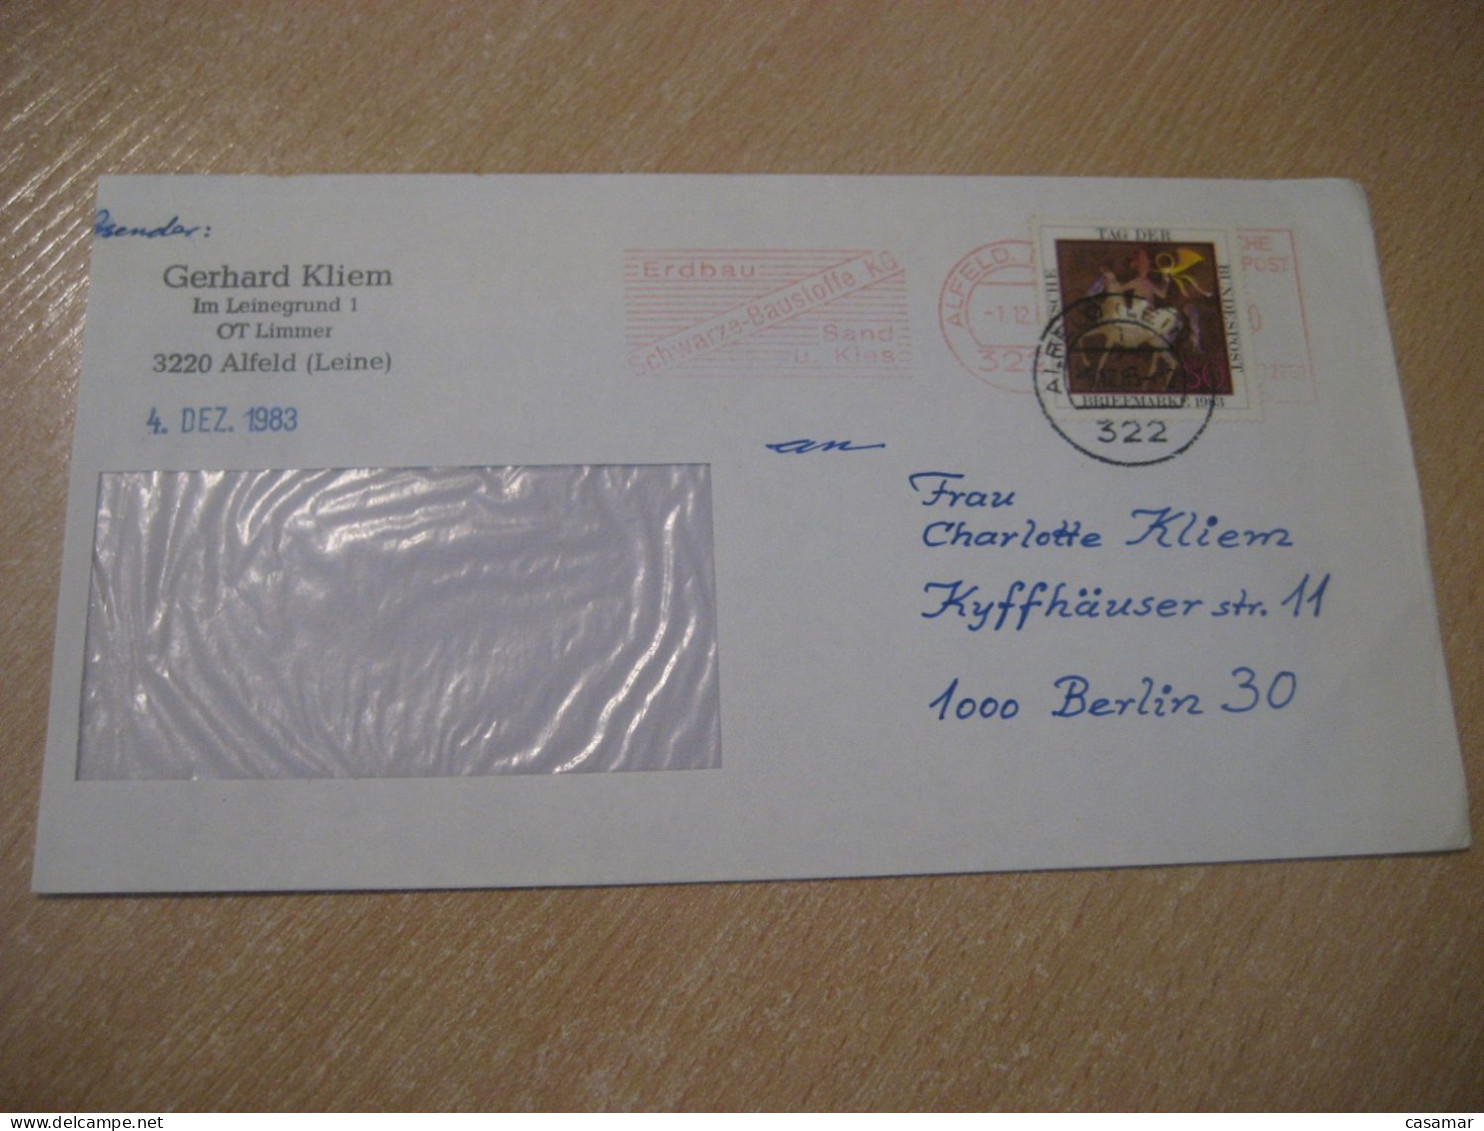 ALFELF 1983 To Berlin Meter Mail Cancel Cover GERMANY - Briefe U. Dokumente